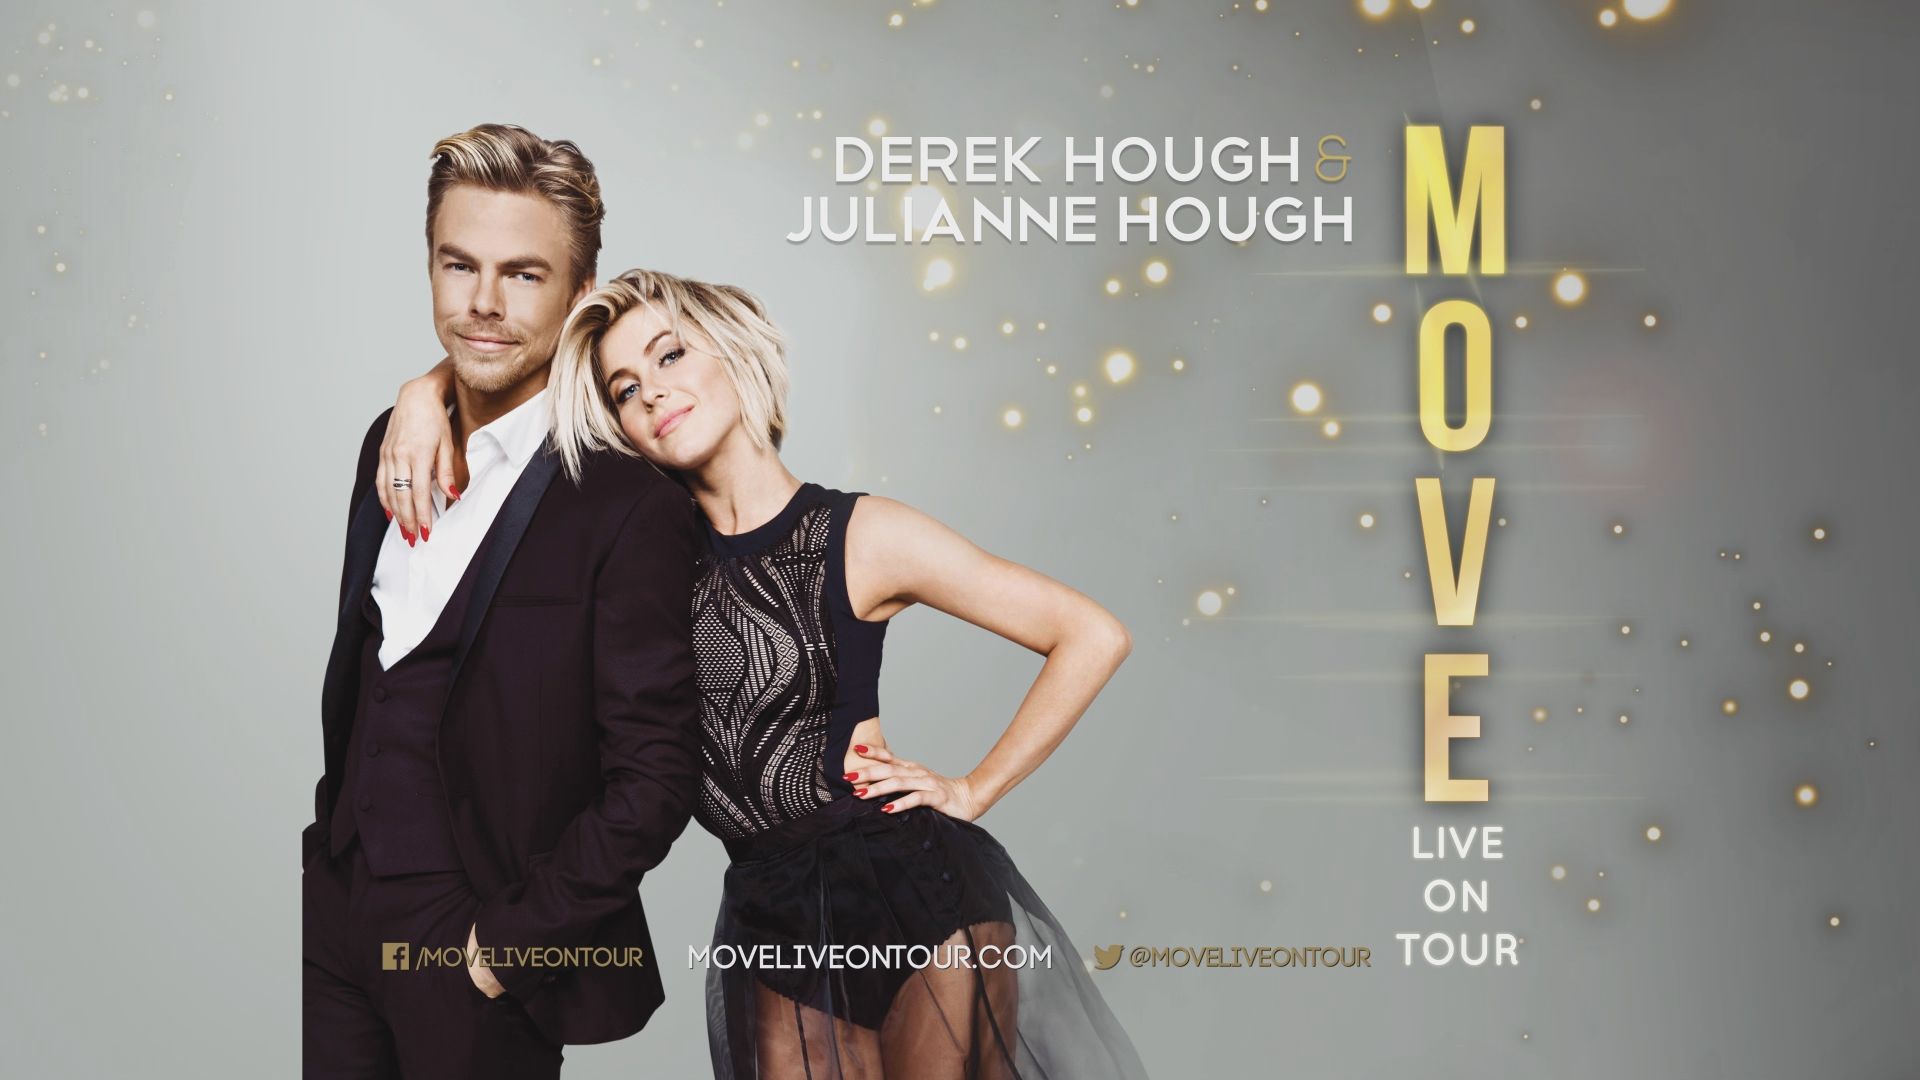 Derek & Julianne Hough - Move Live On Tour - poster